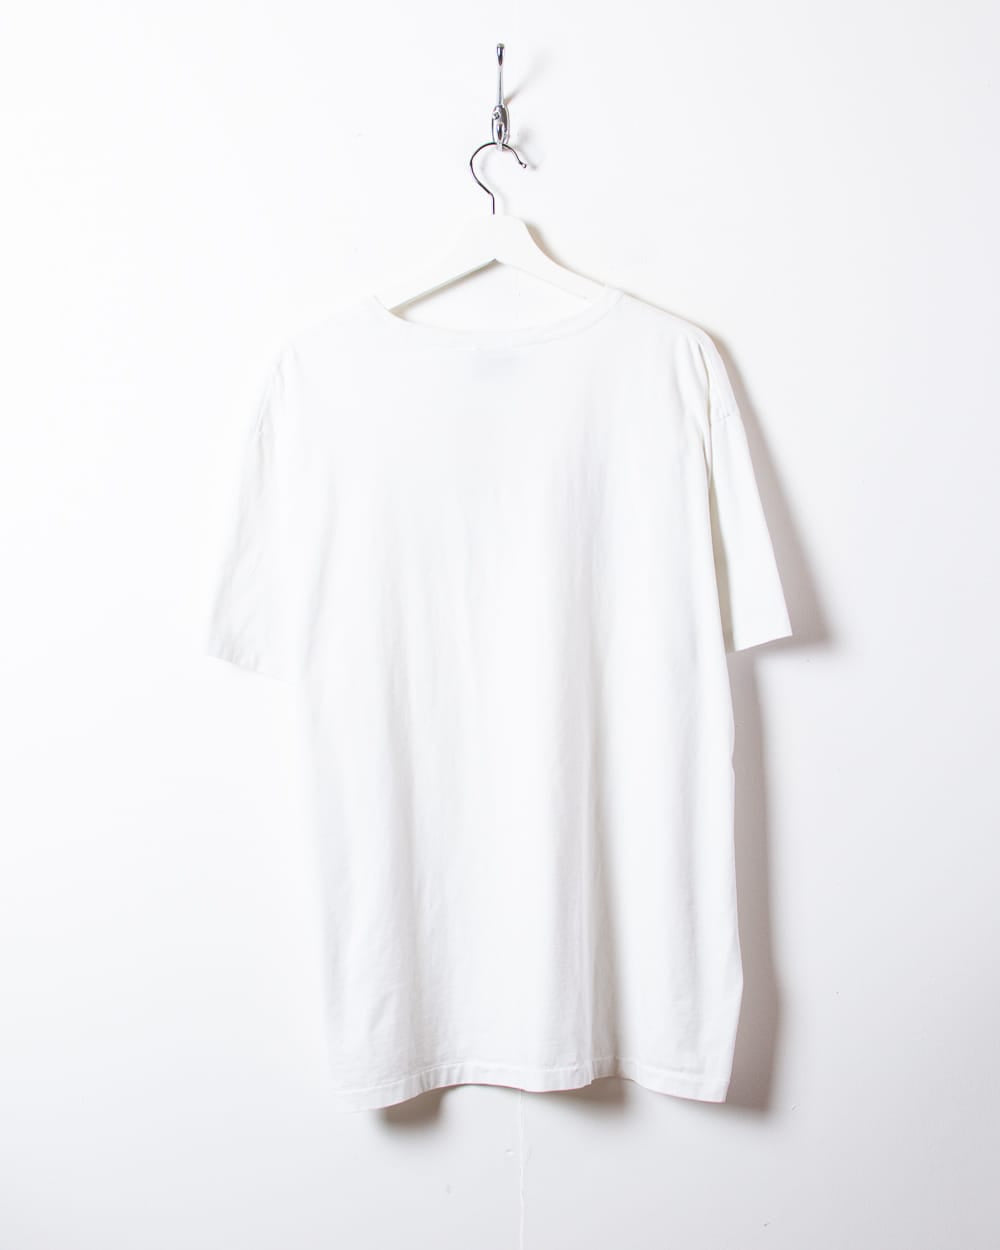 Polo Ralph Lauren Single Stitch T-Shirt - X-Large